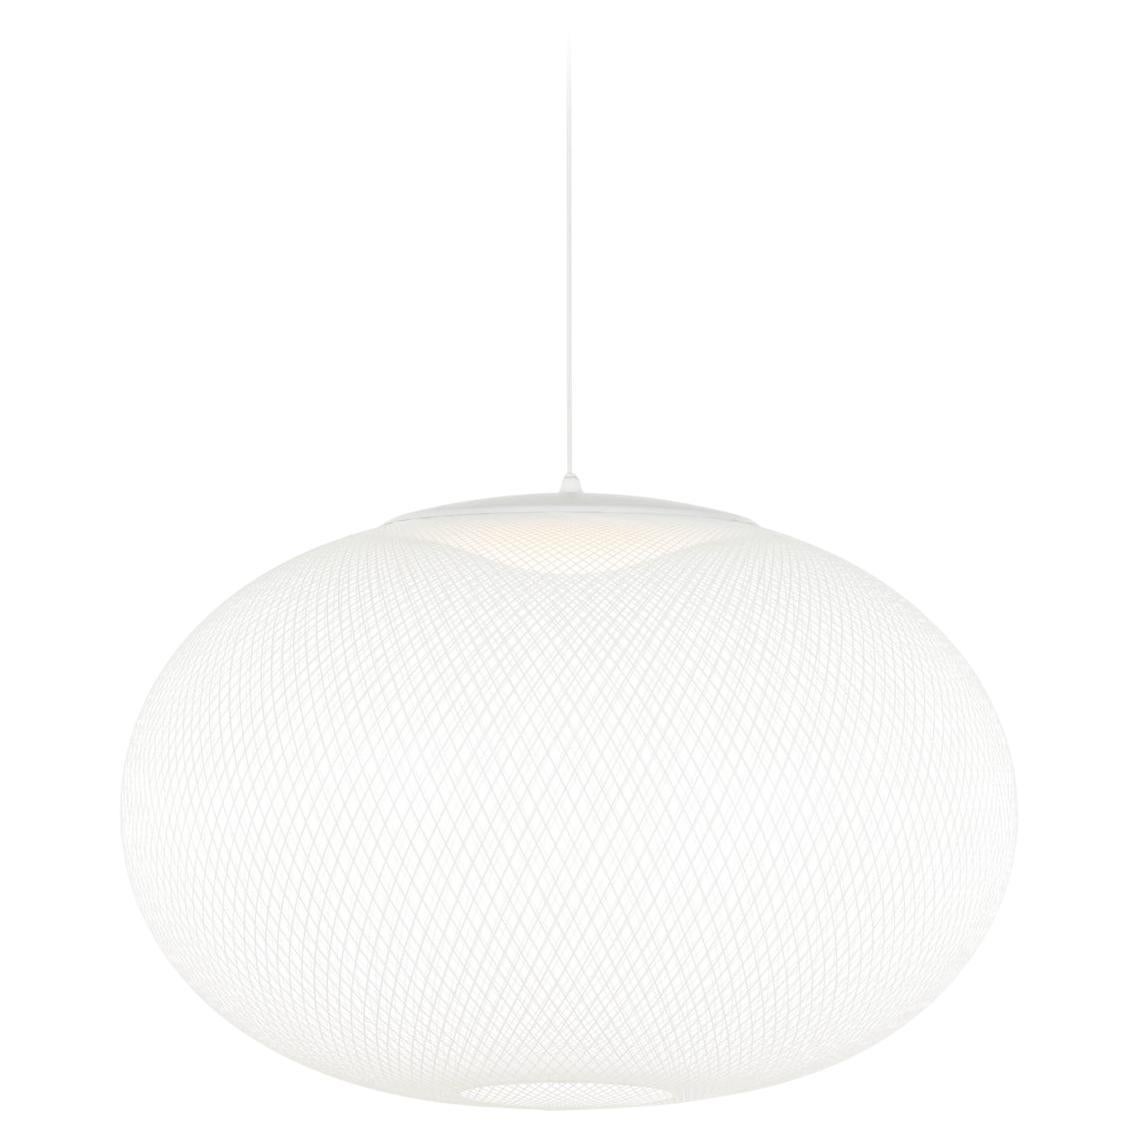 Moooi NR2 Large White LED Suspension Lamp in Aluminum and Fiberglass For Sale